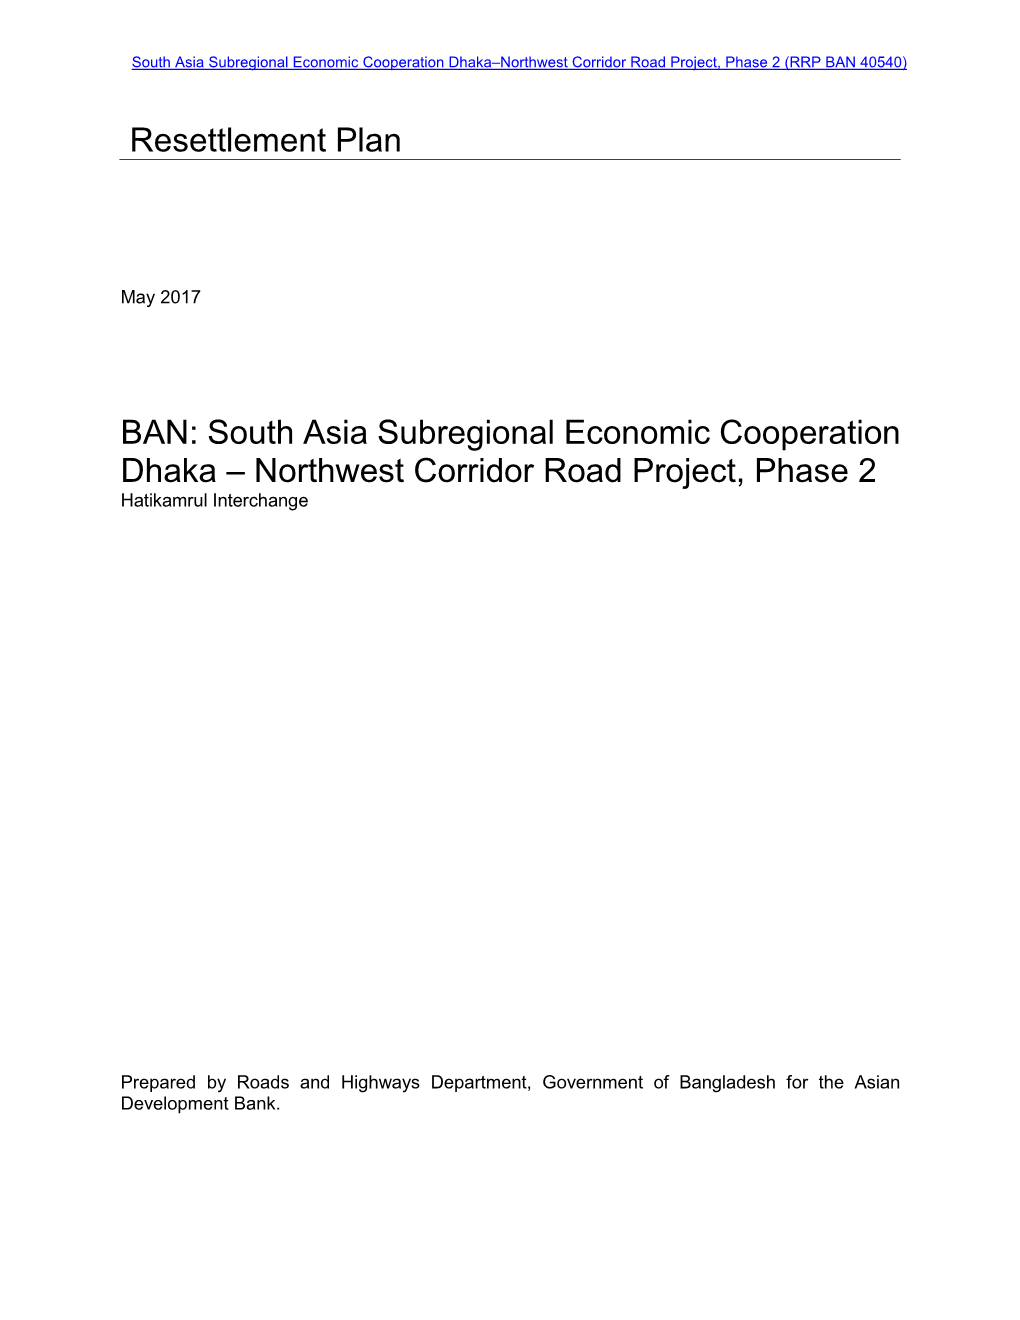 Resettlement Plan BAN: South Asia Subregional Economic Cooperation Dhaka – Northwest Corridor Road Project, Phase 2